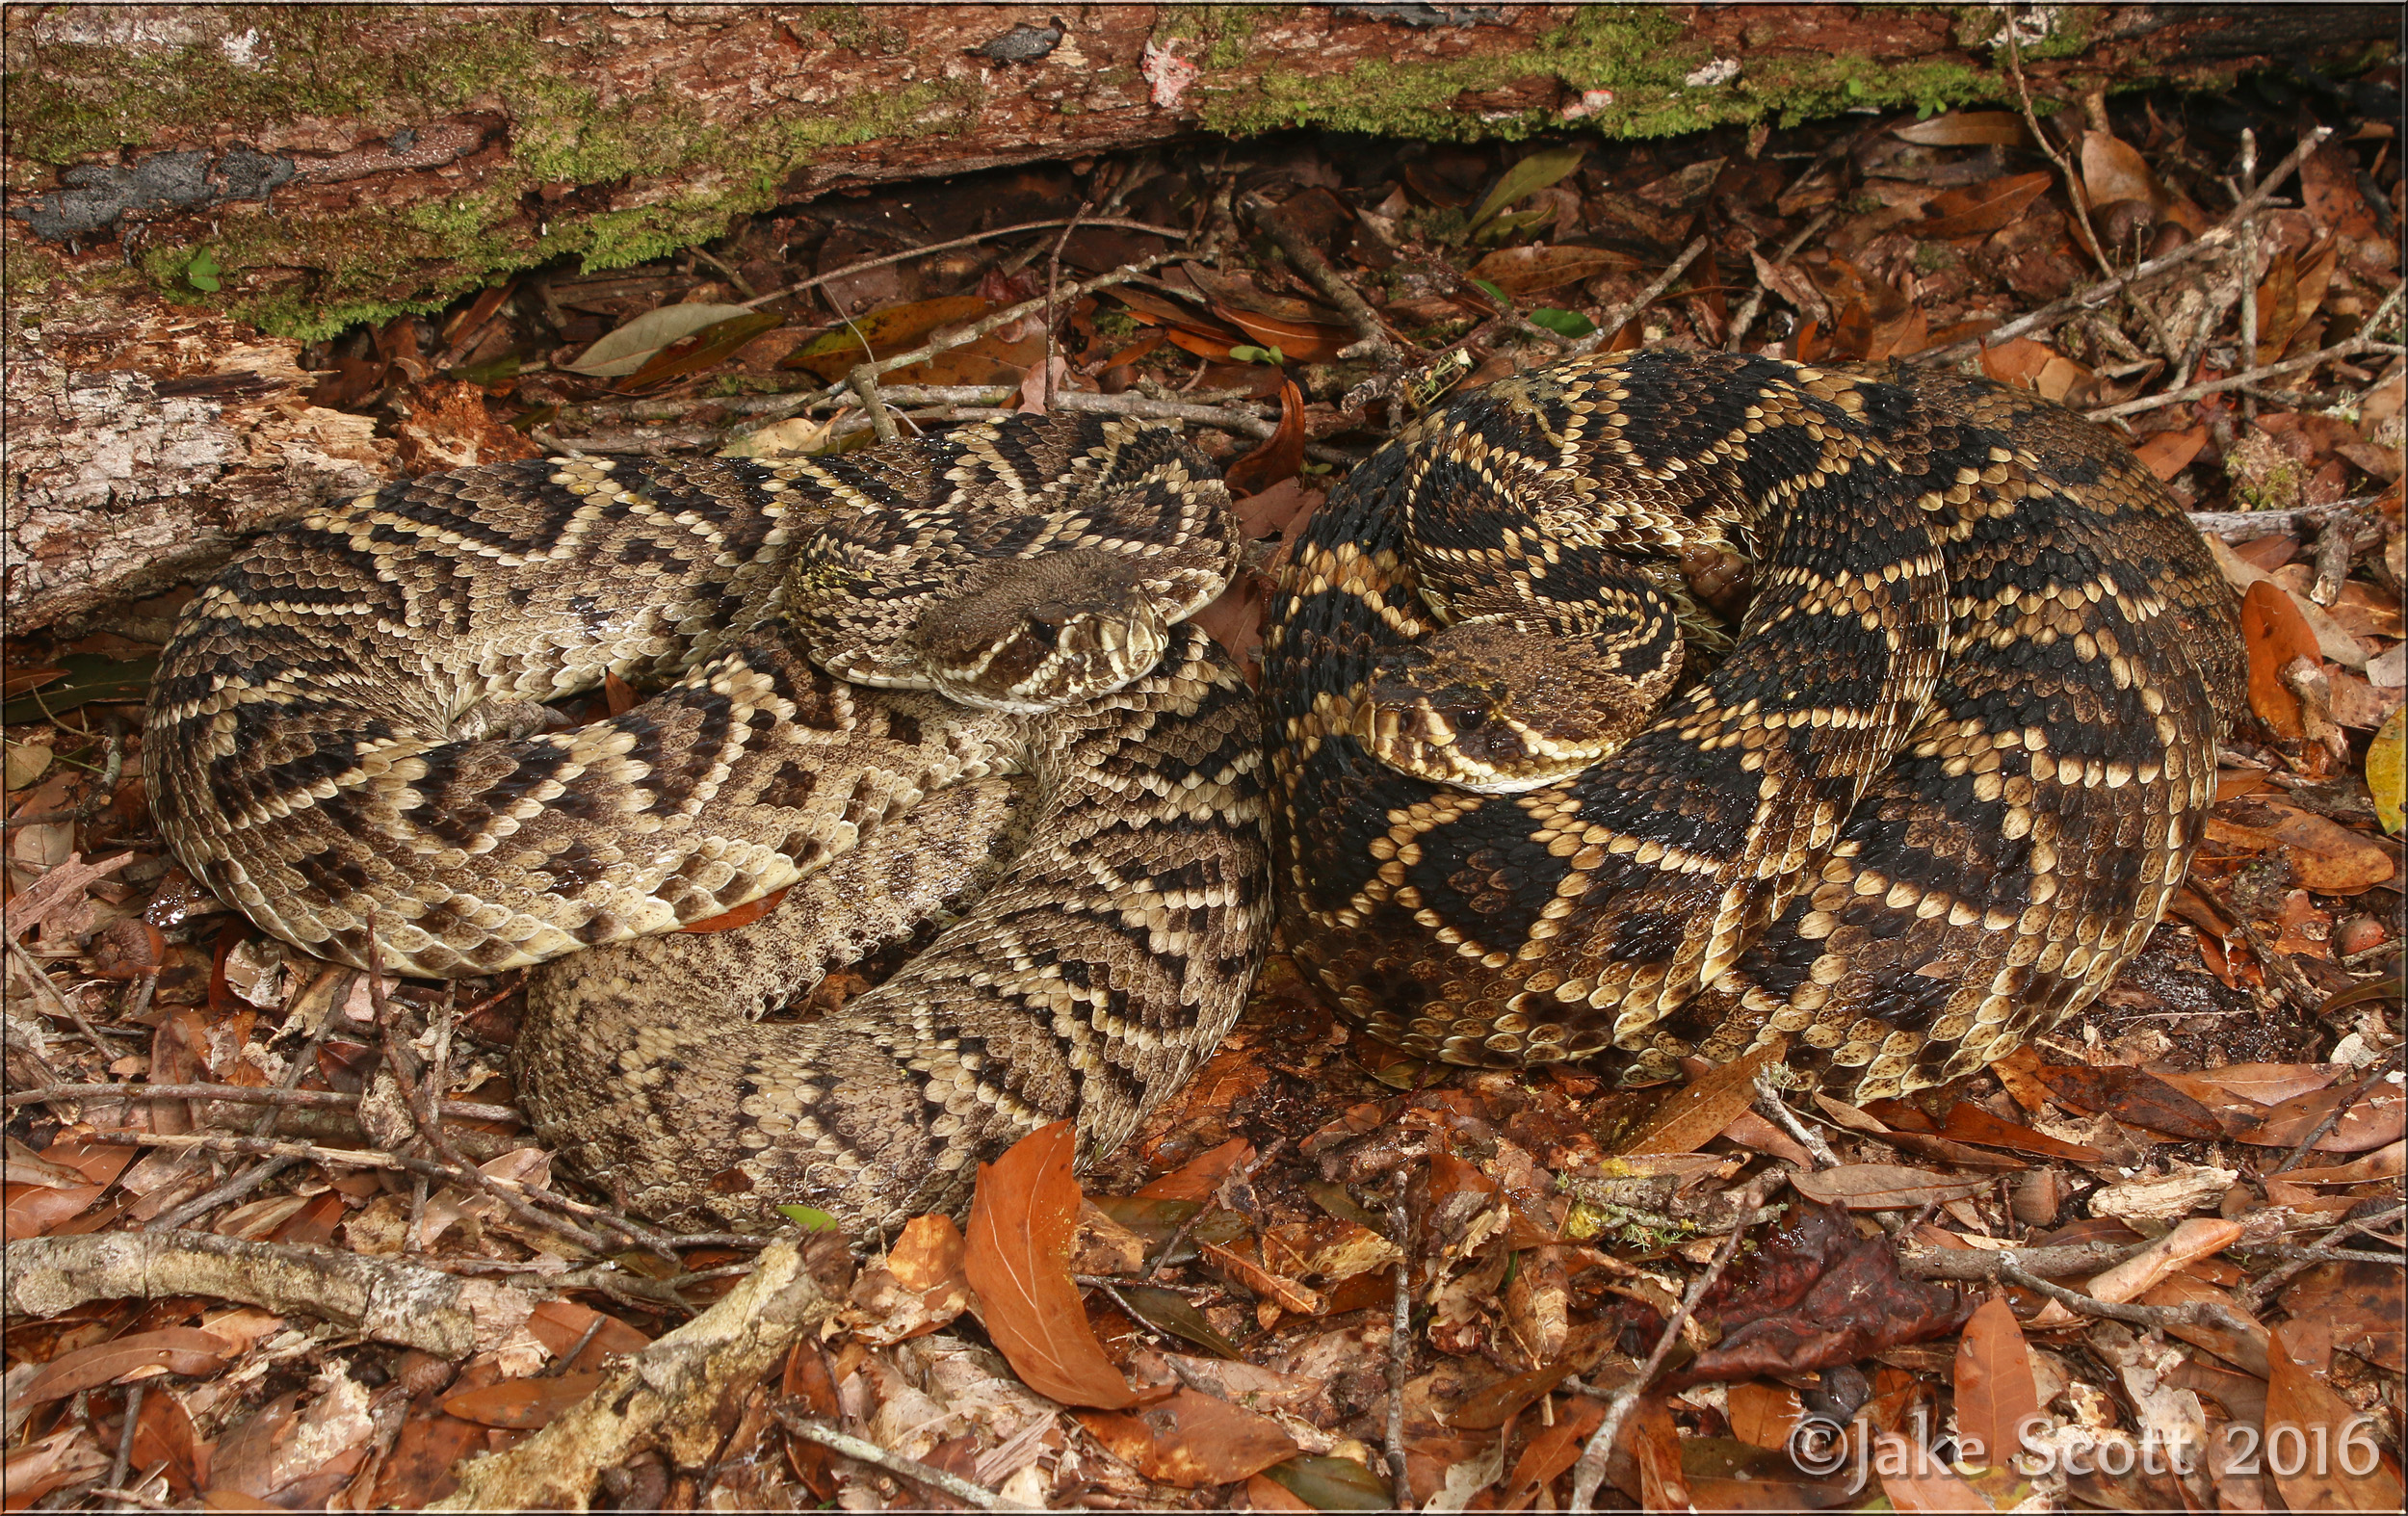 Eastern Diamondback Rattlesnakes (Crotalus adamanteus)